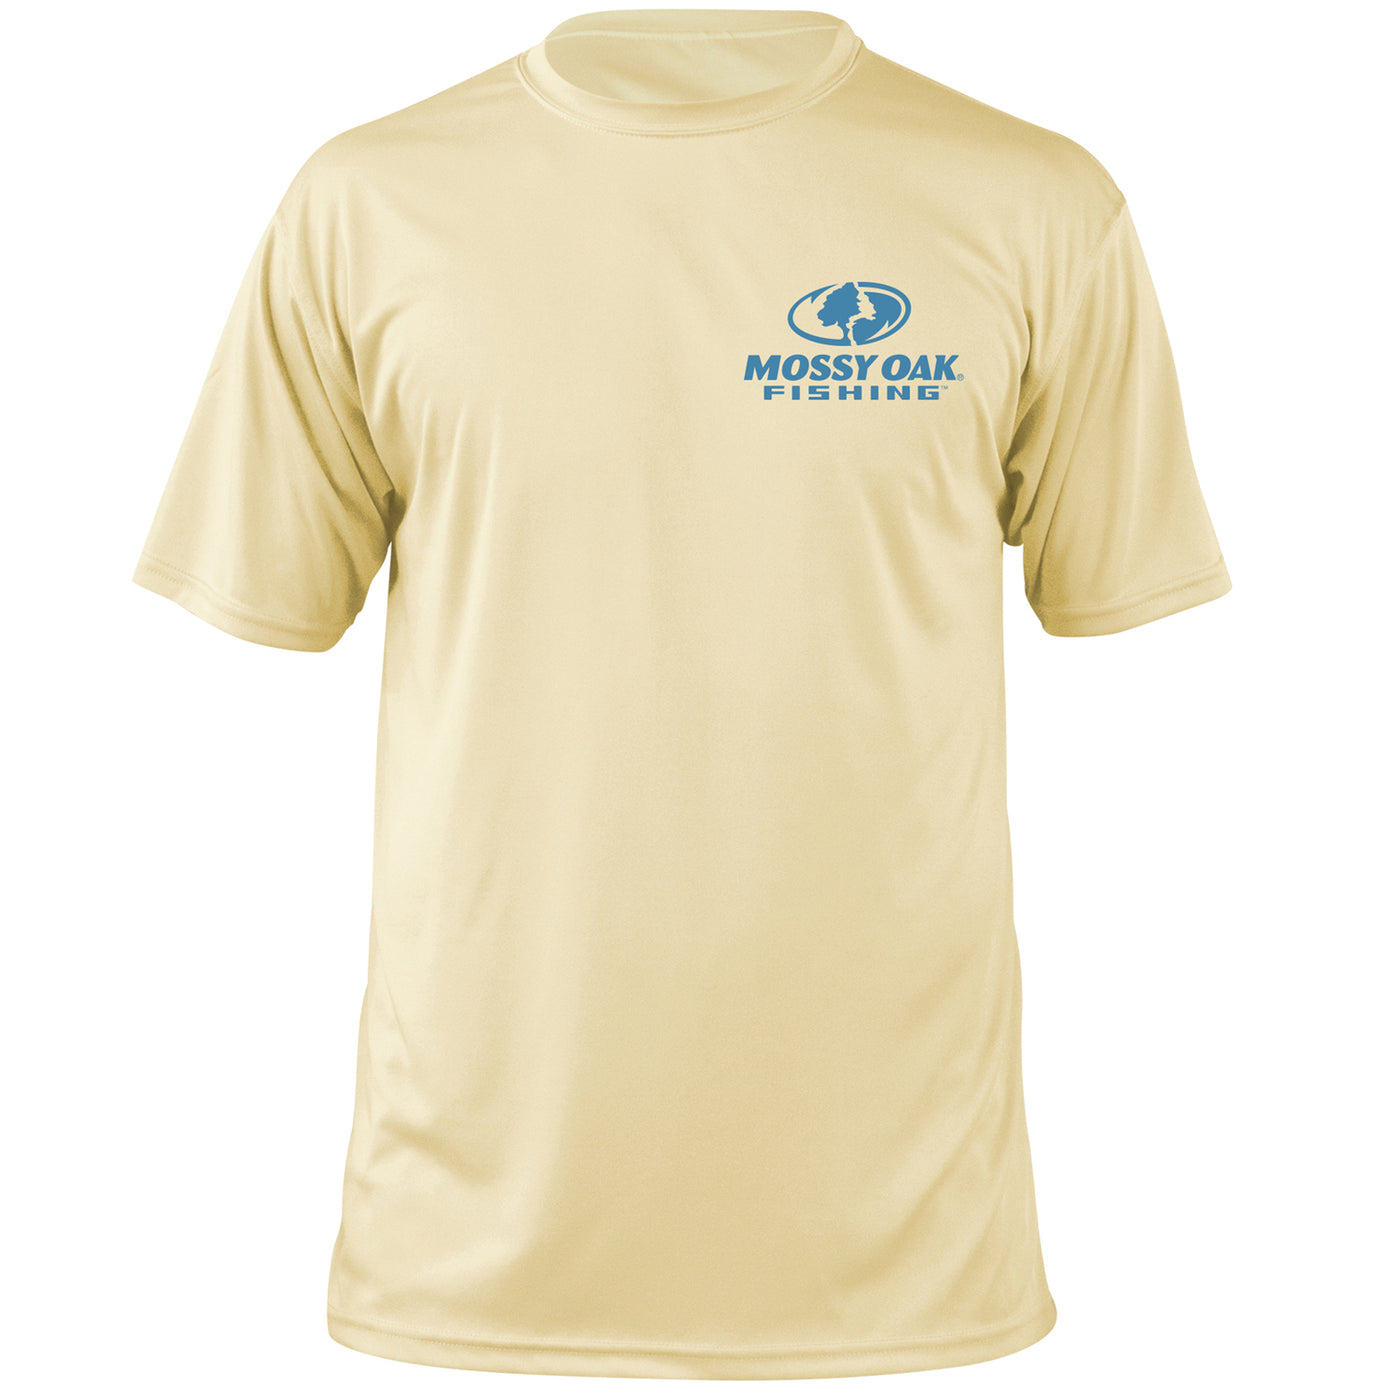 Mossy Oak Fishing Graphic Shirt Short Sleeve Pale Yellow Front